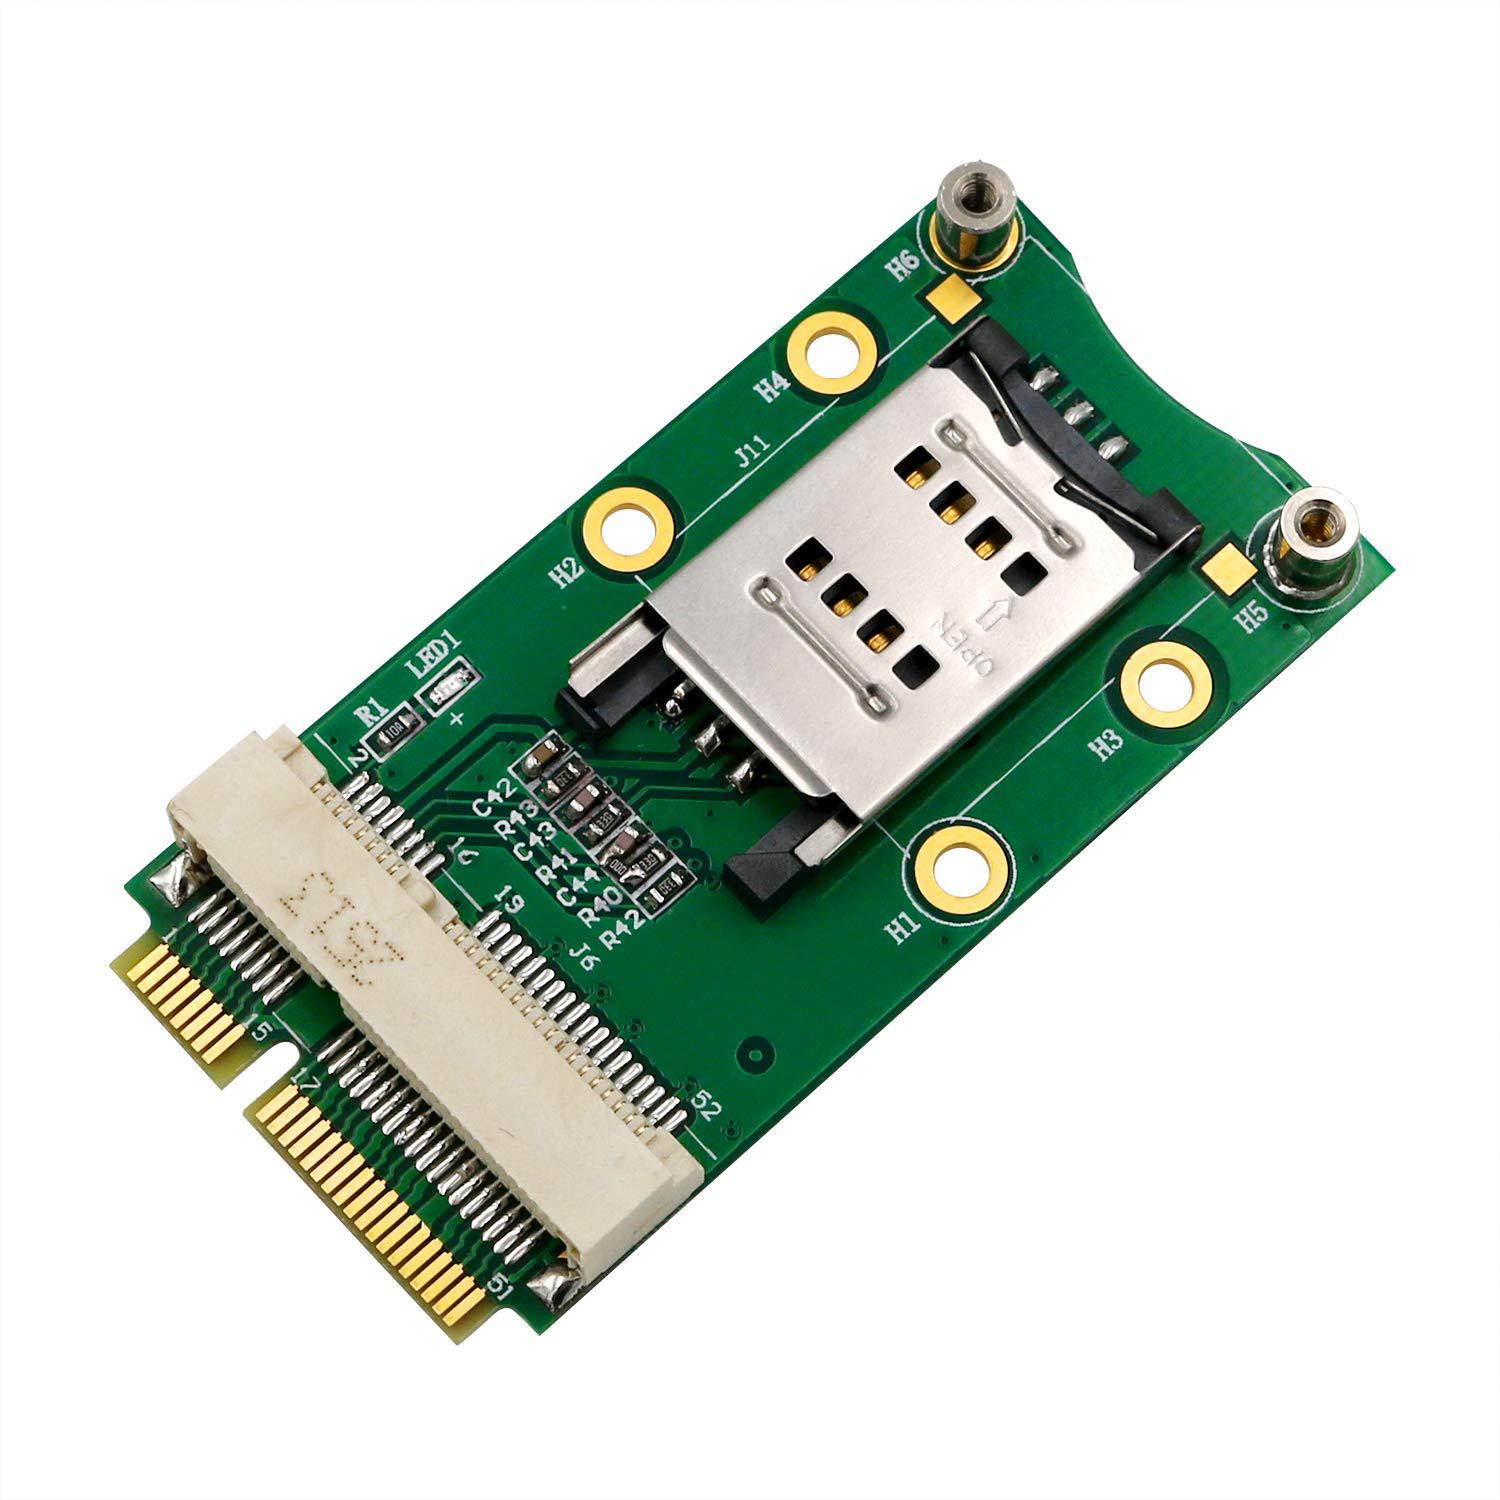 SUPERPLUS mini pci-e adapter with sim card slot for 3g/4g,wwan lte,gps card (clamshell sim card holder)